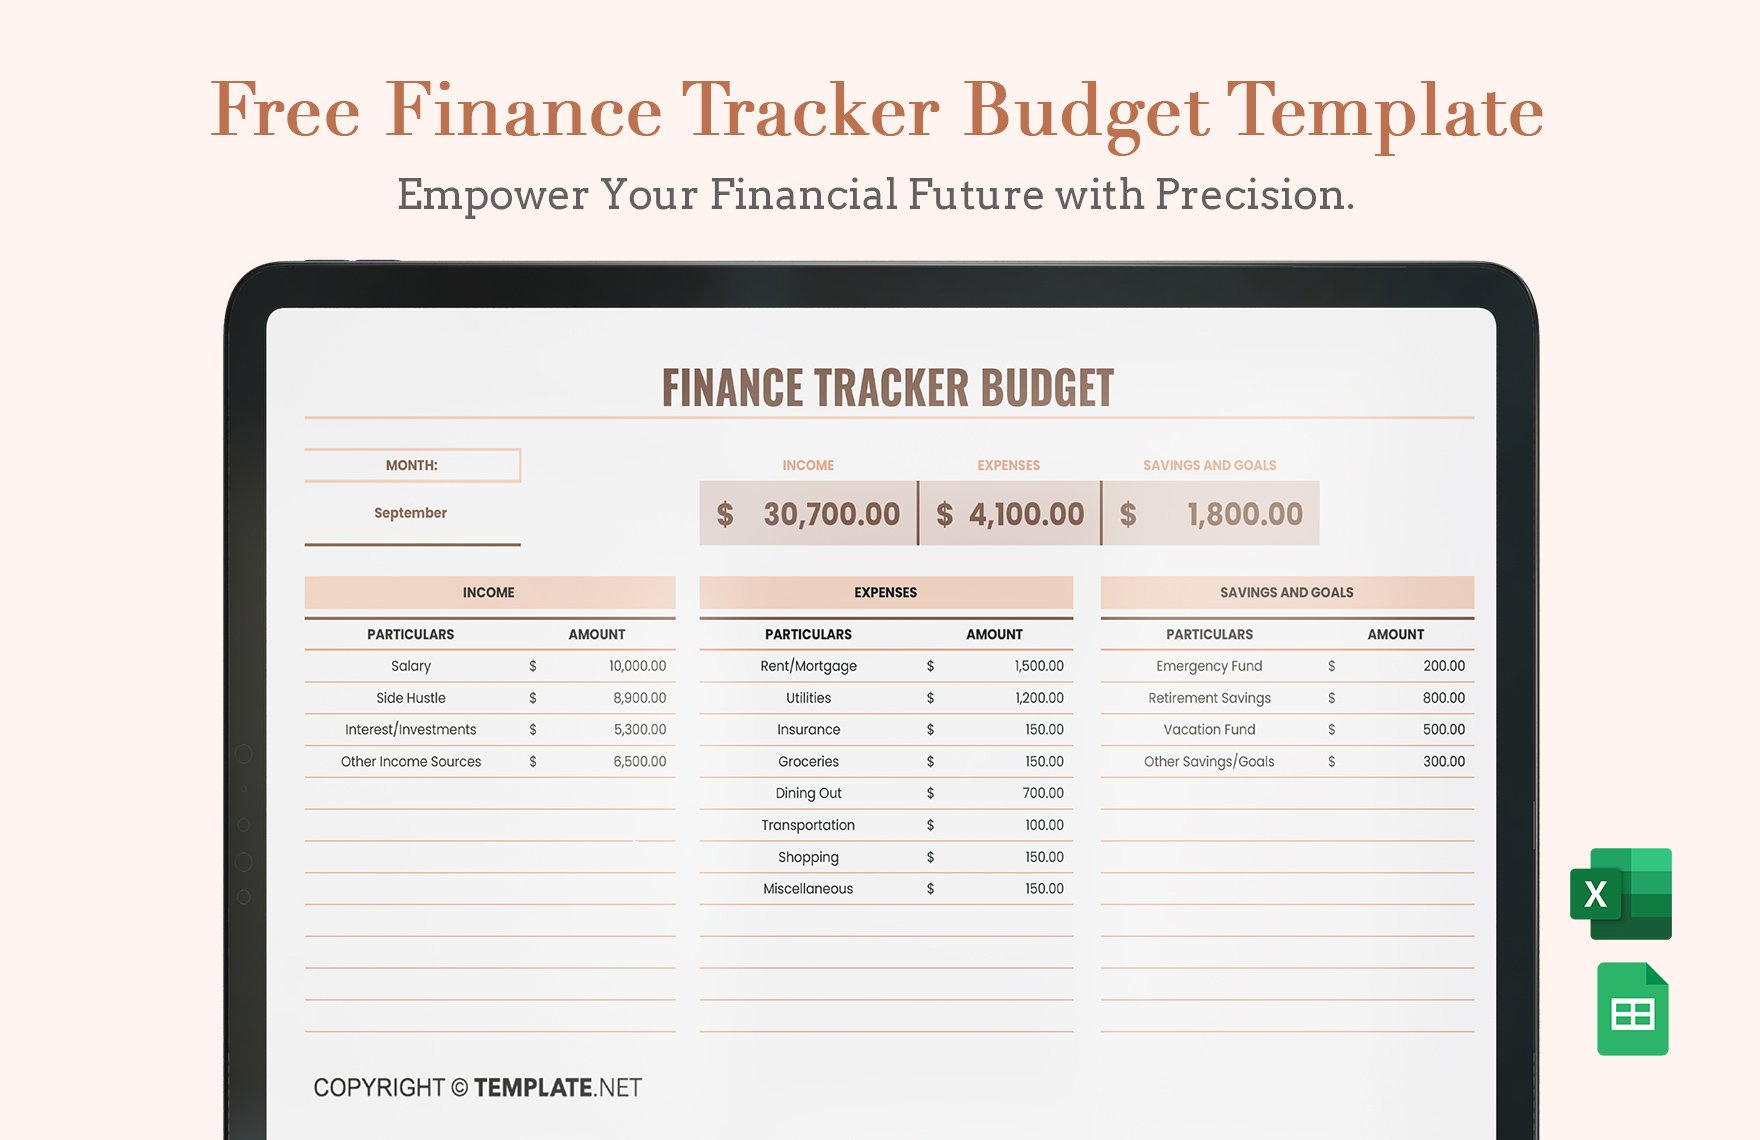 Free Finance Tracker Budget Template